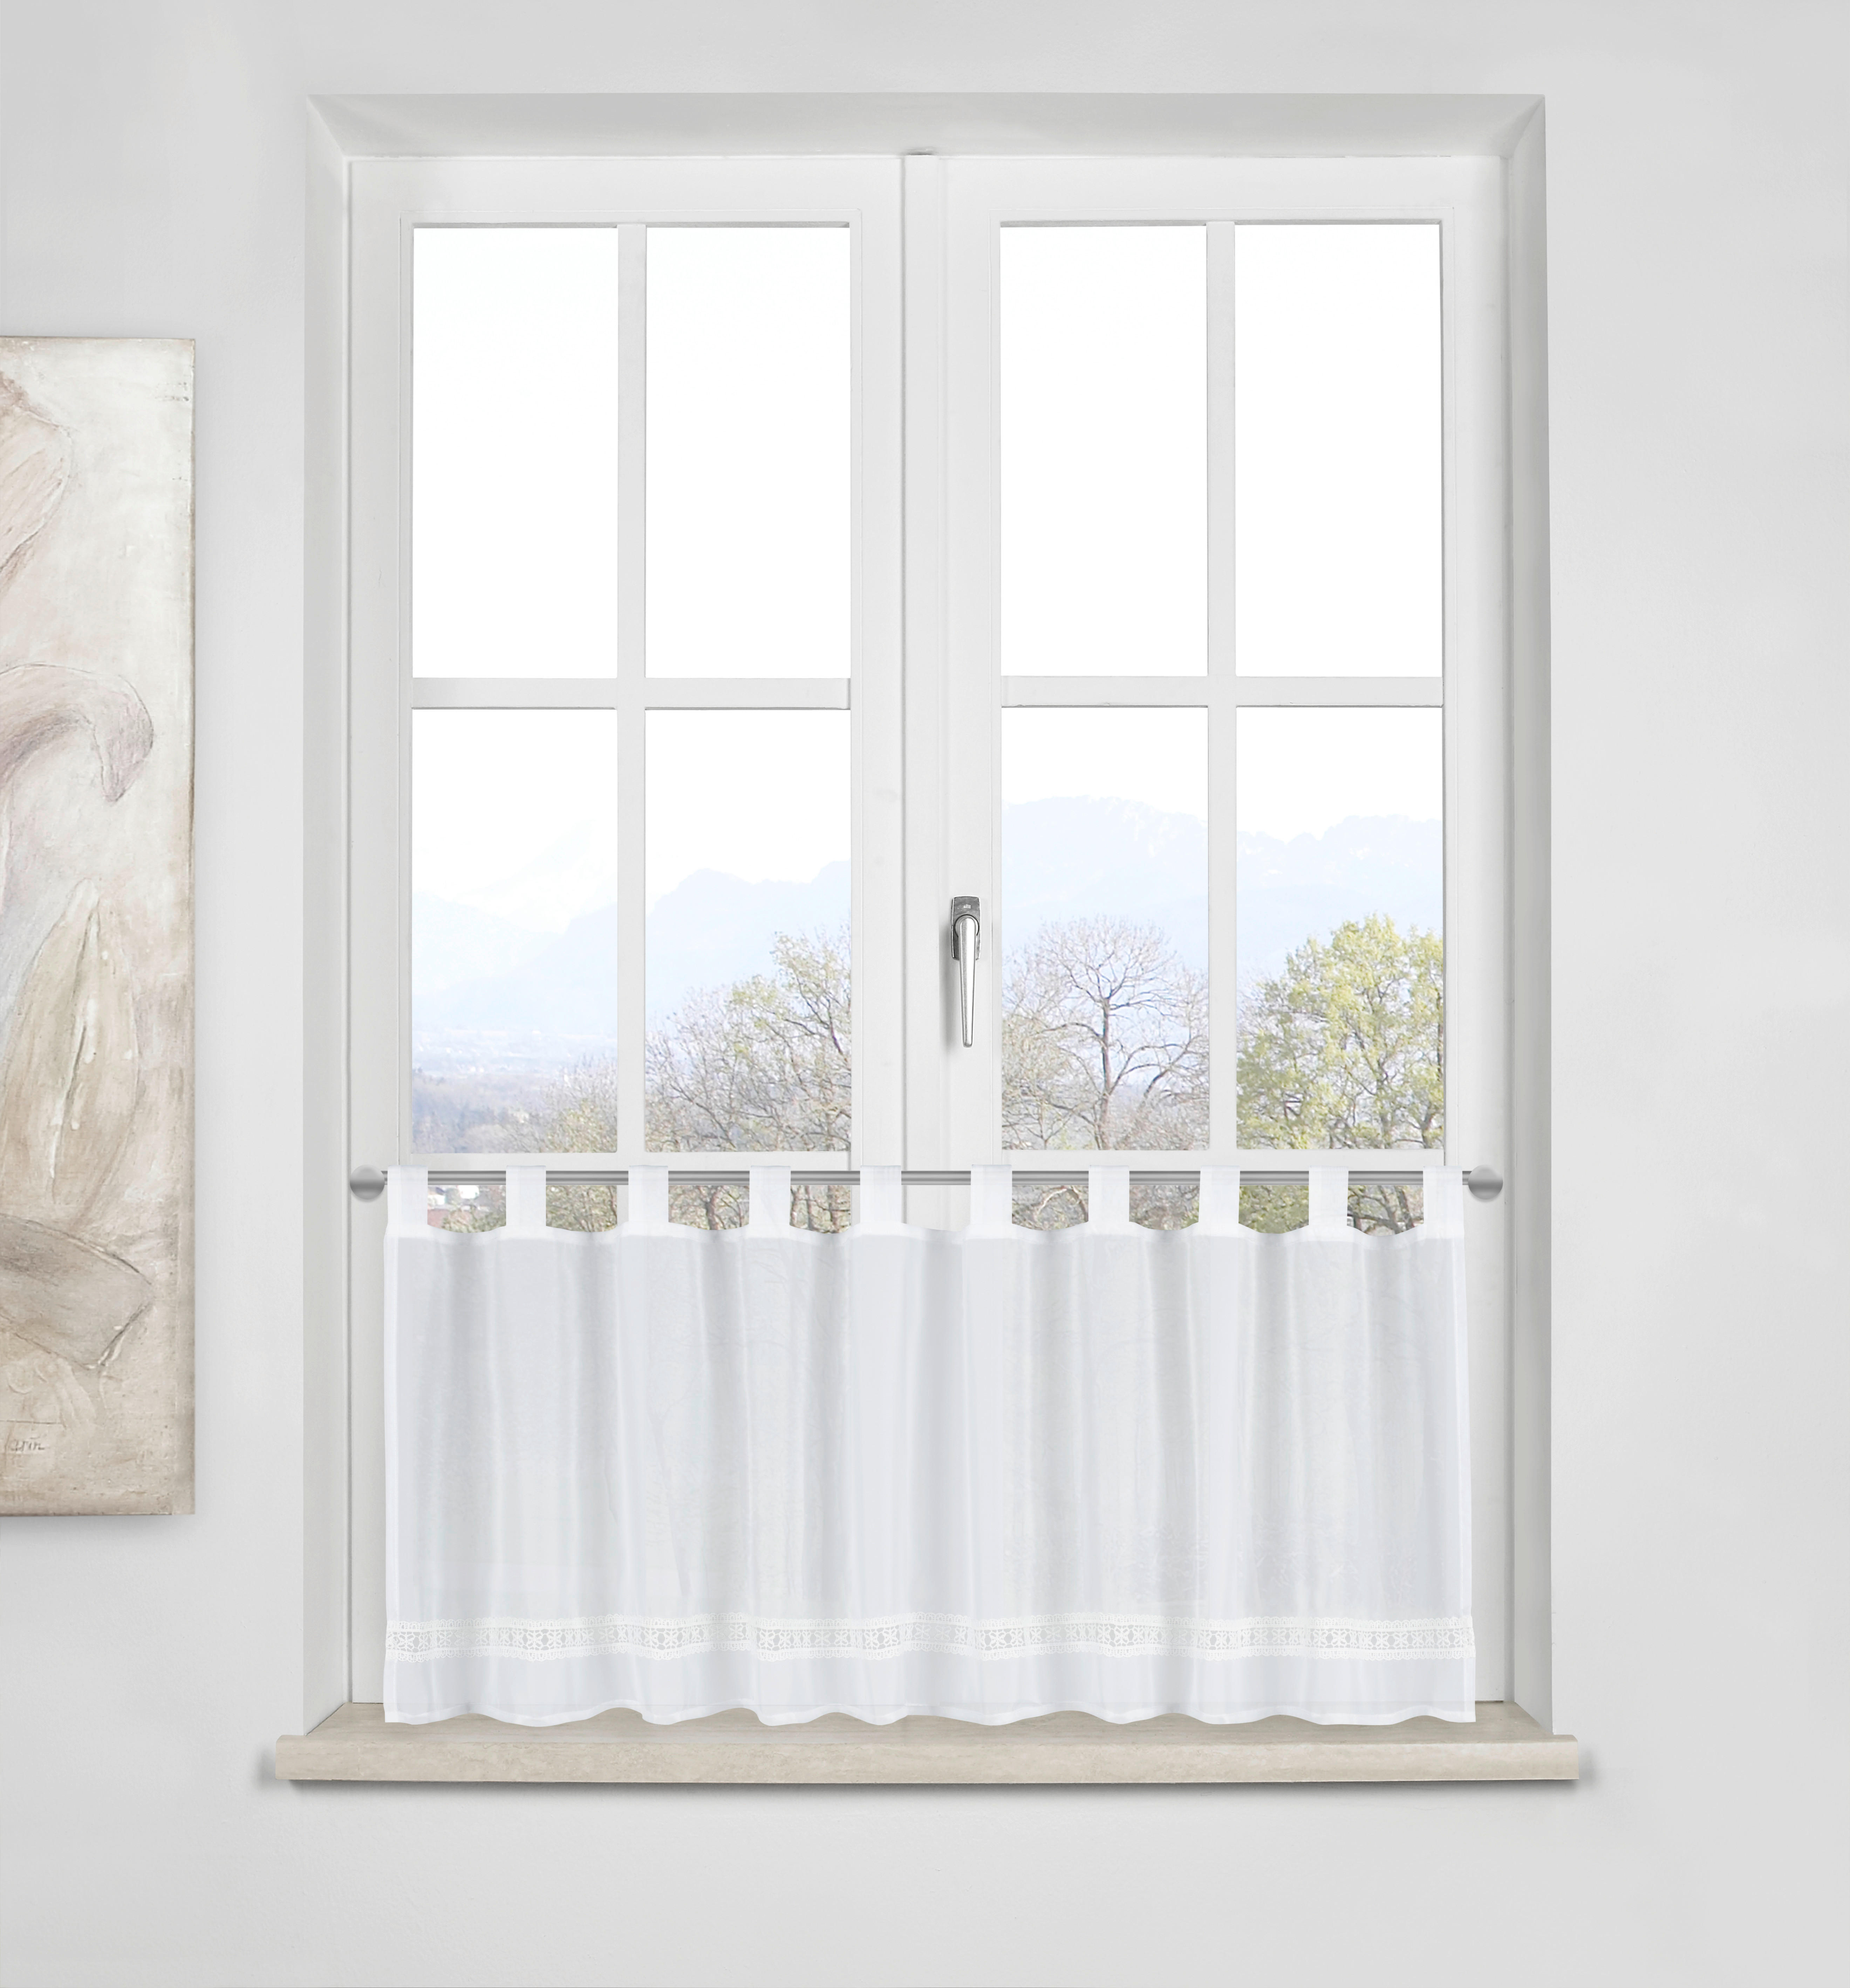 KURZGARDINE   140/45 cm   - Weiß, LIFESTYLE, Textil (140/45cm) - Esposa